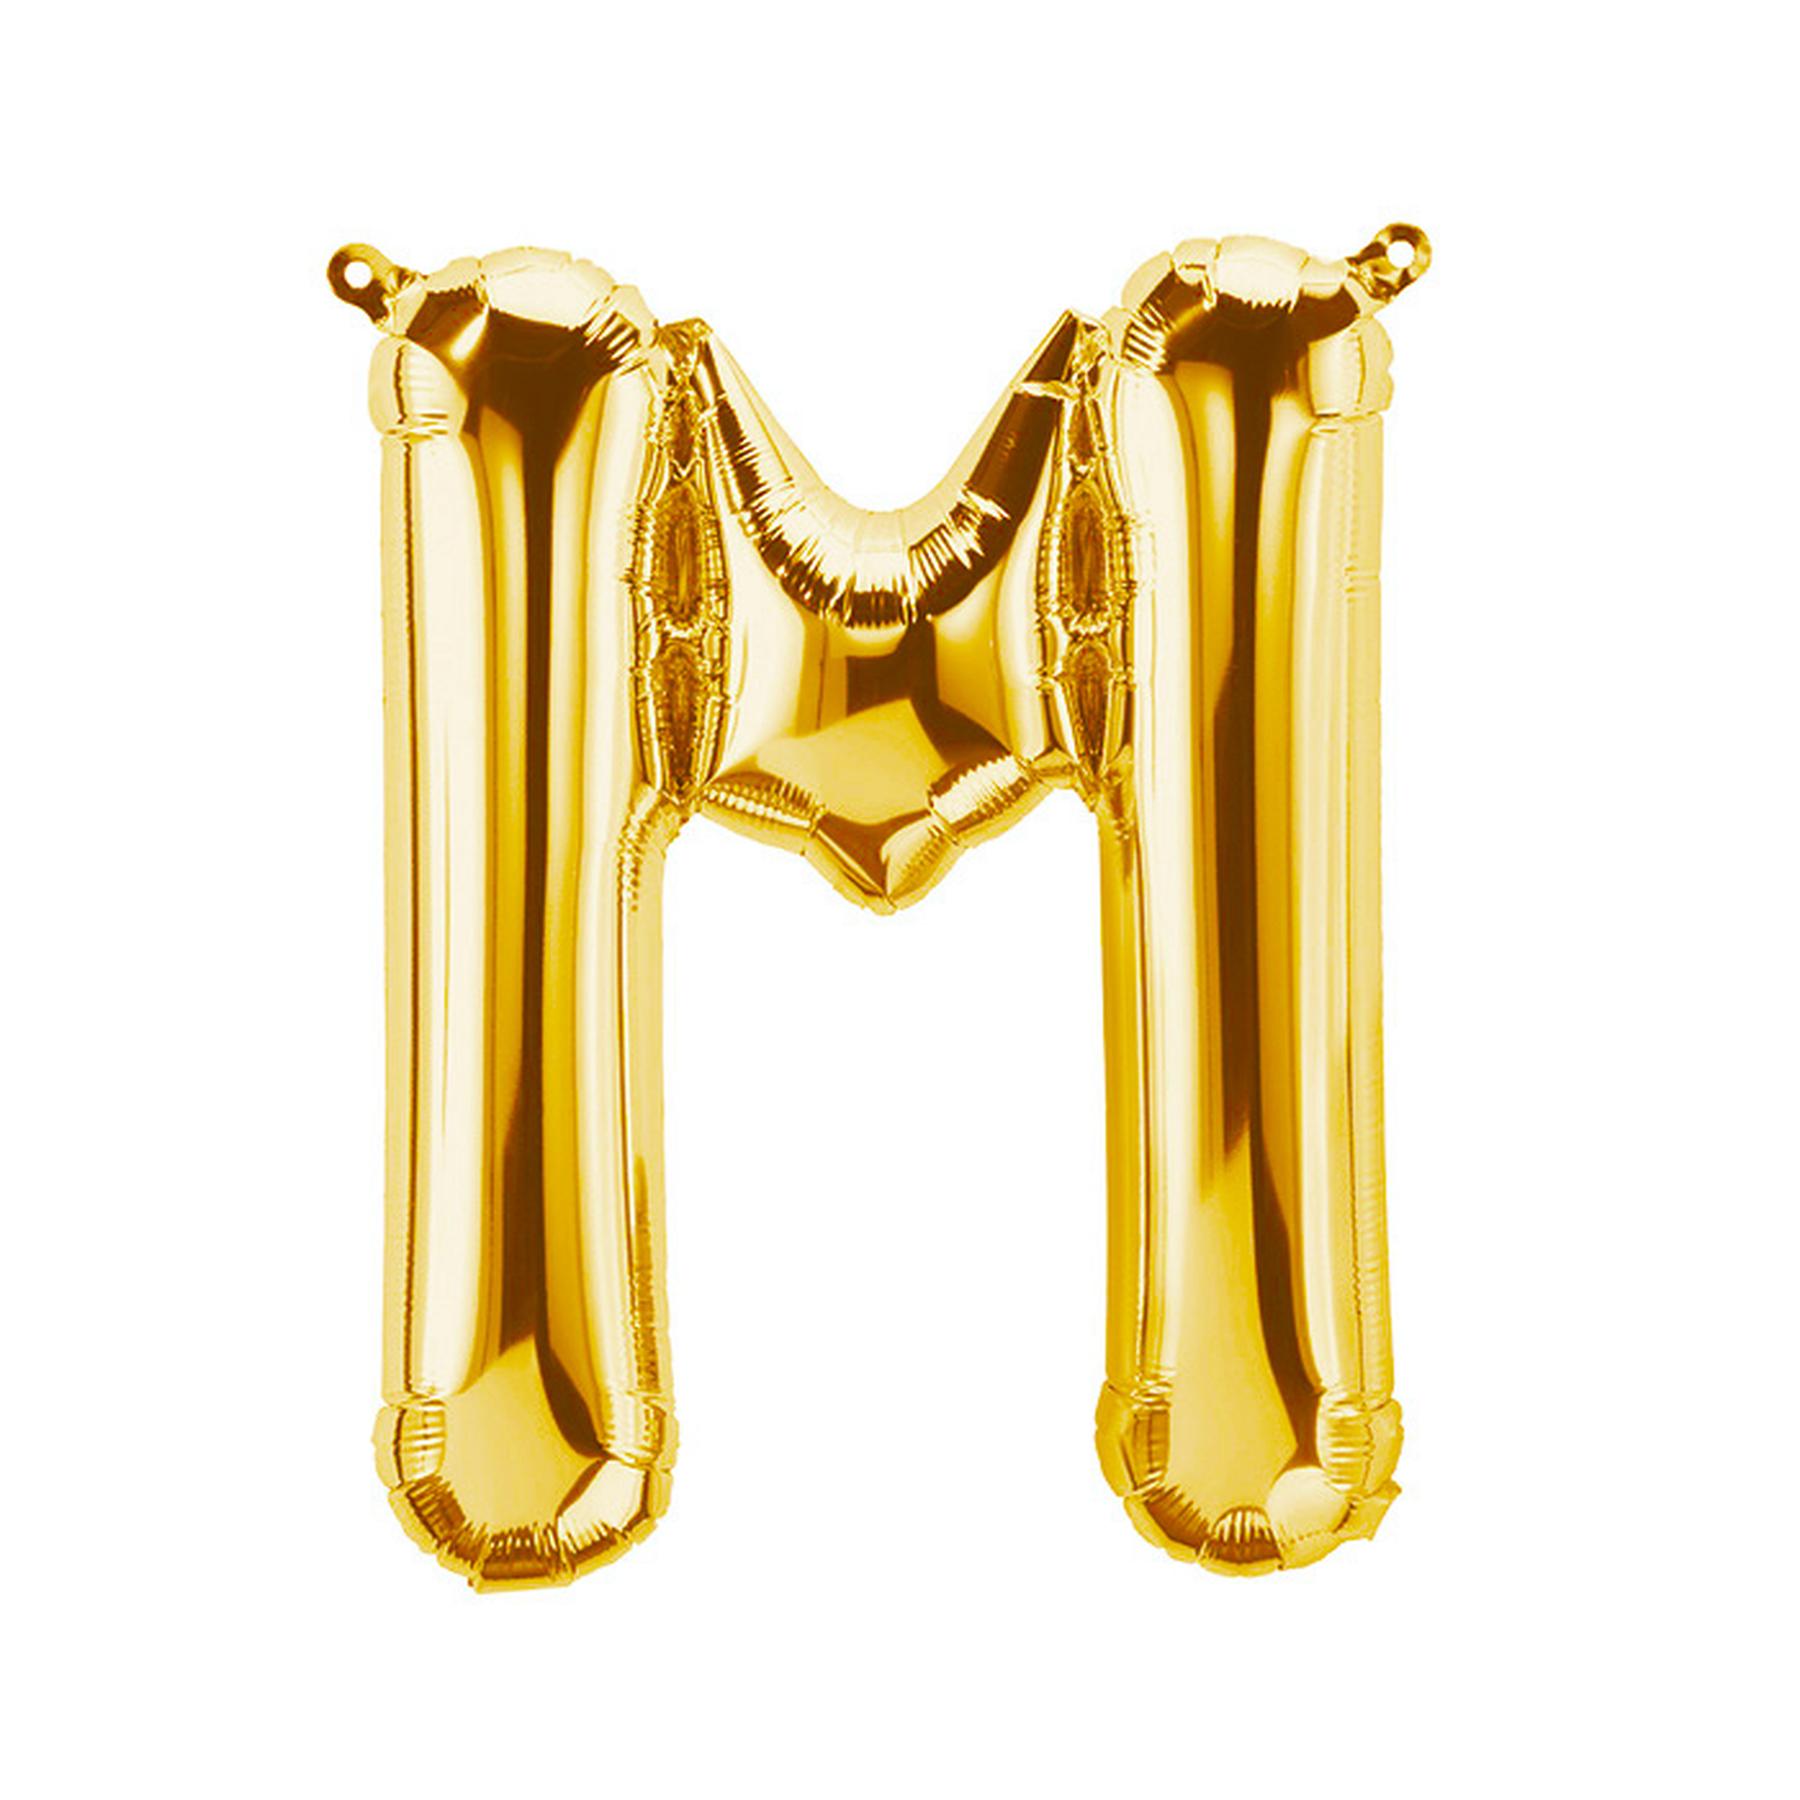 Folienballon Buchstabe M, gold, ca. 40 cm, für Luftbefüllung